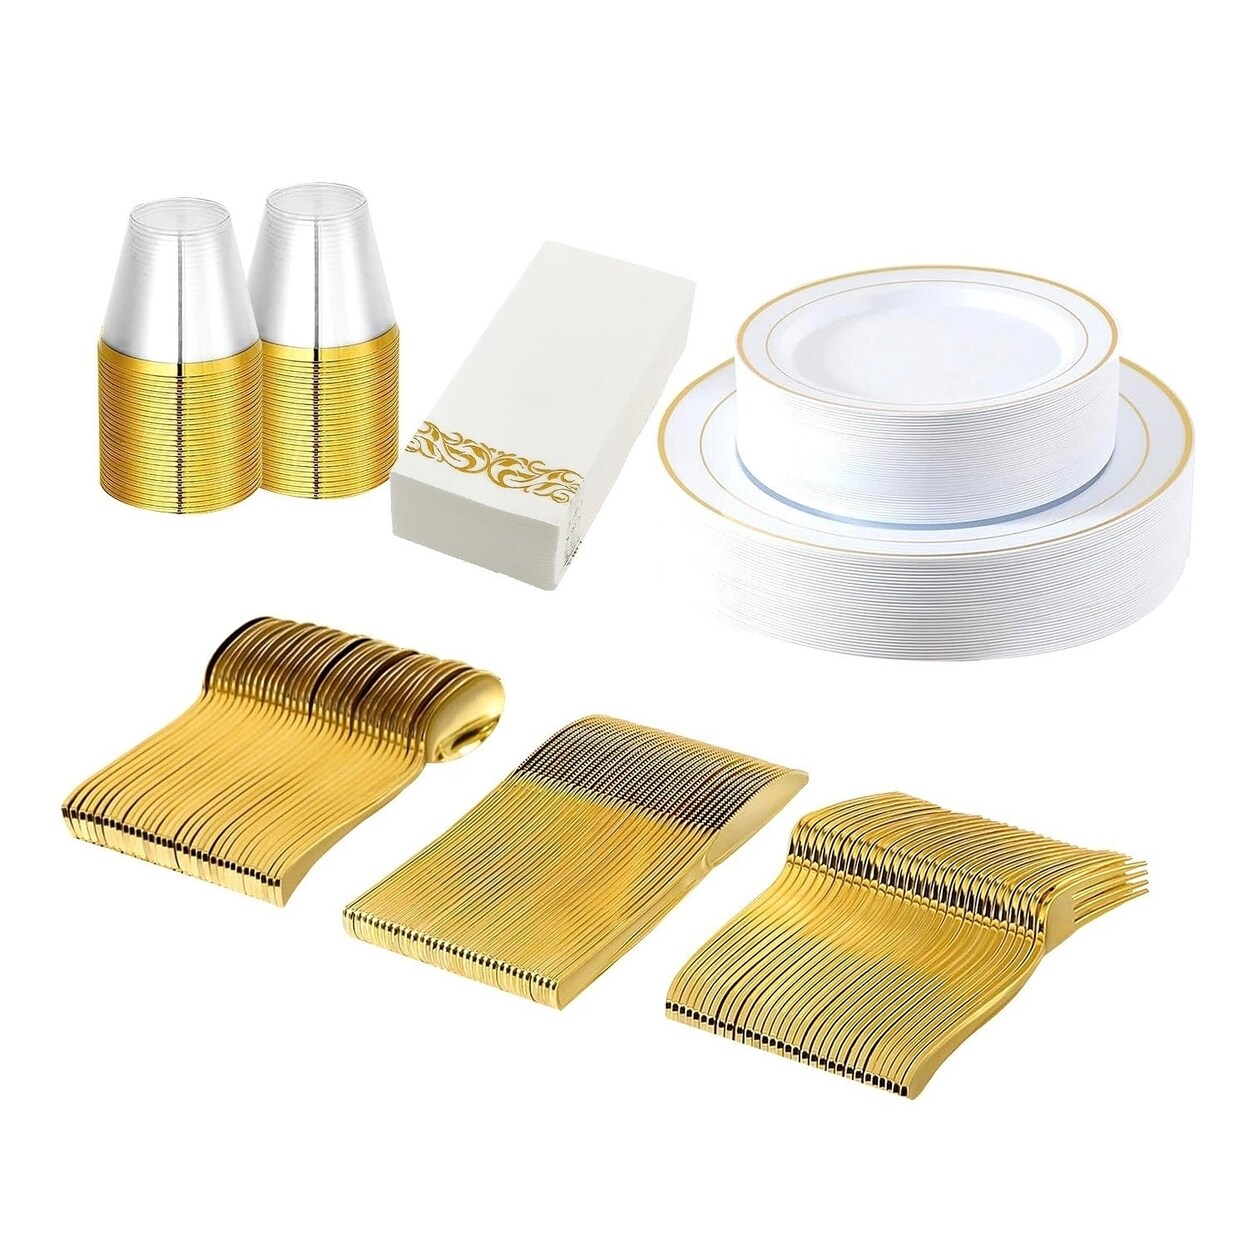 SKUSHOPS 175Pcs Disposable Gold Dinnerware Set Gold Rim Plastic Plates Cups Fork Spoon Knife Paper Napkins for Party Wedding